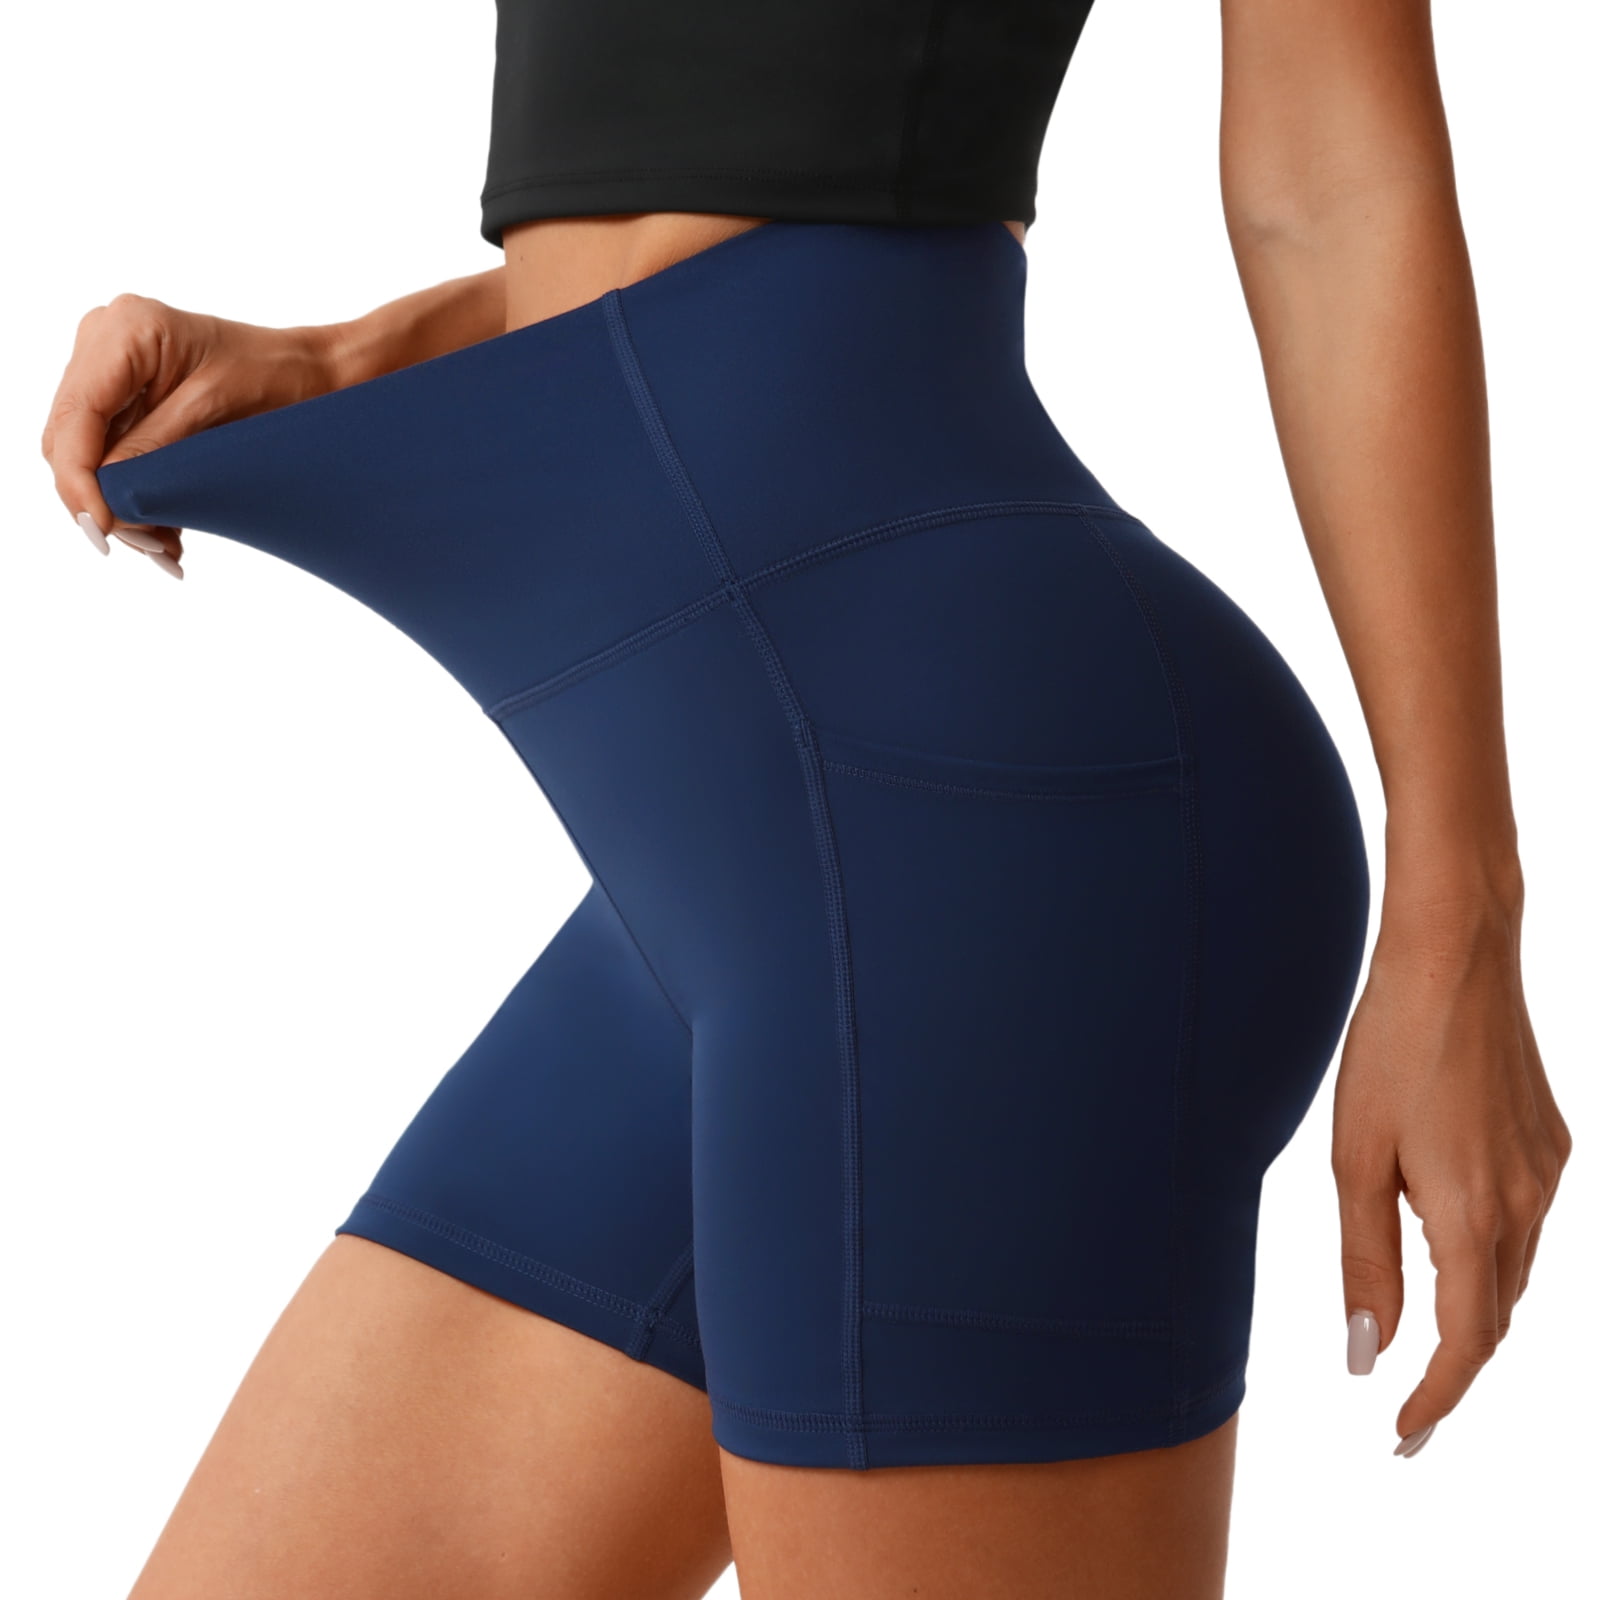 EQWLJWE Yoga Pants for Women High Waist Biker Shorts Workout Yoga Running  Gym Compression Spandex Shorts Side Pockets,Deals,Clearance 